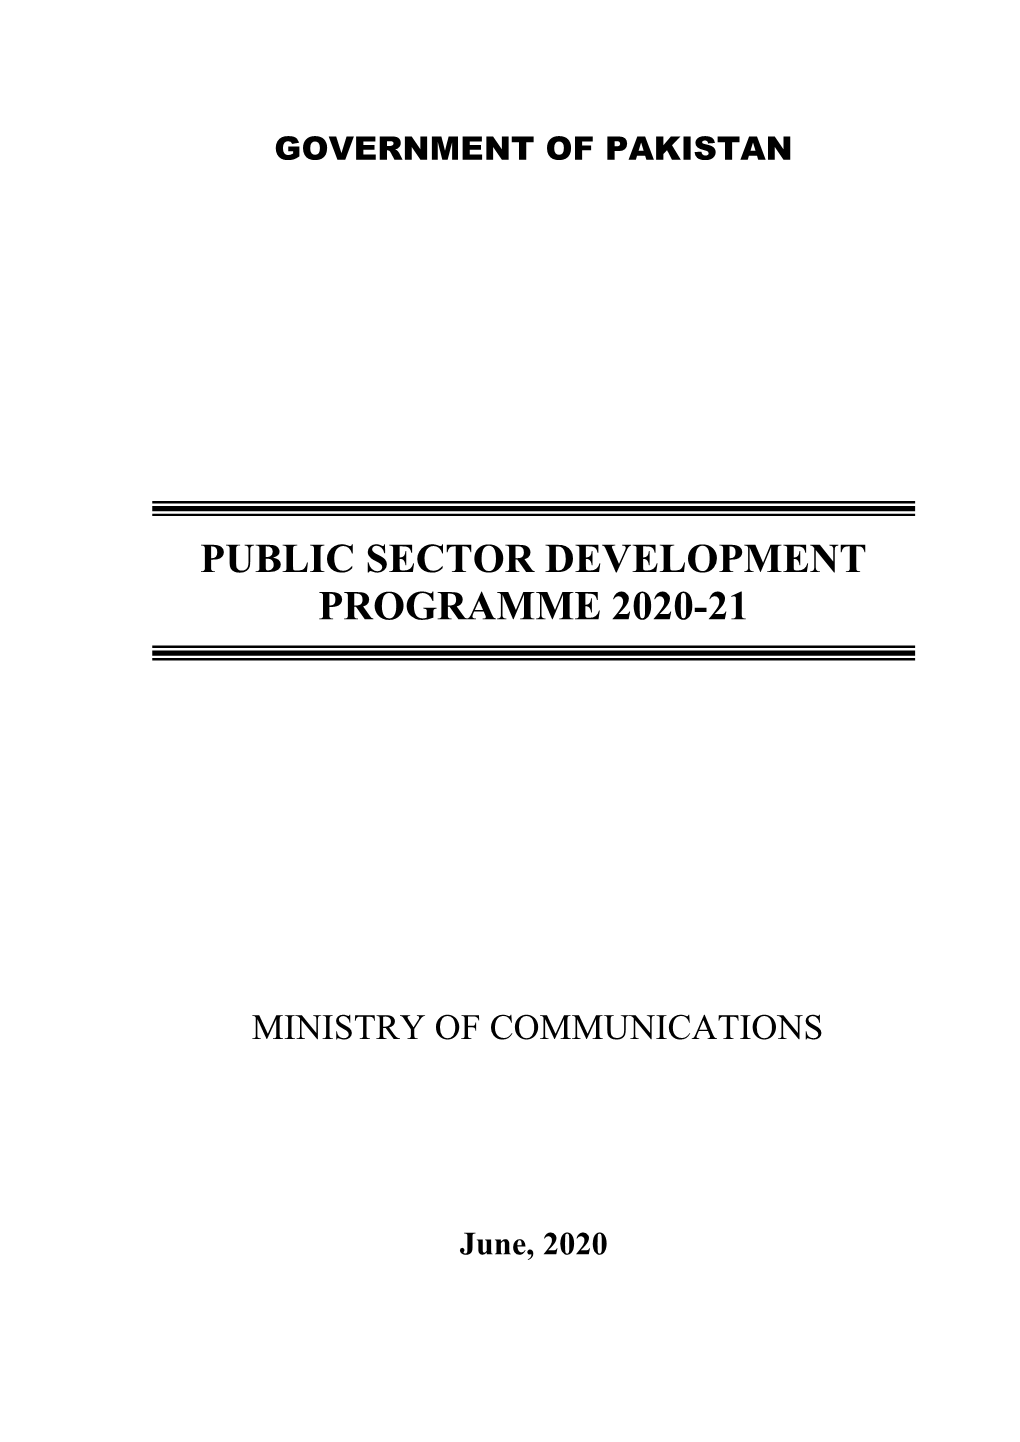 Public Sector Development Programme 2020-21